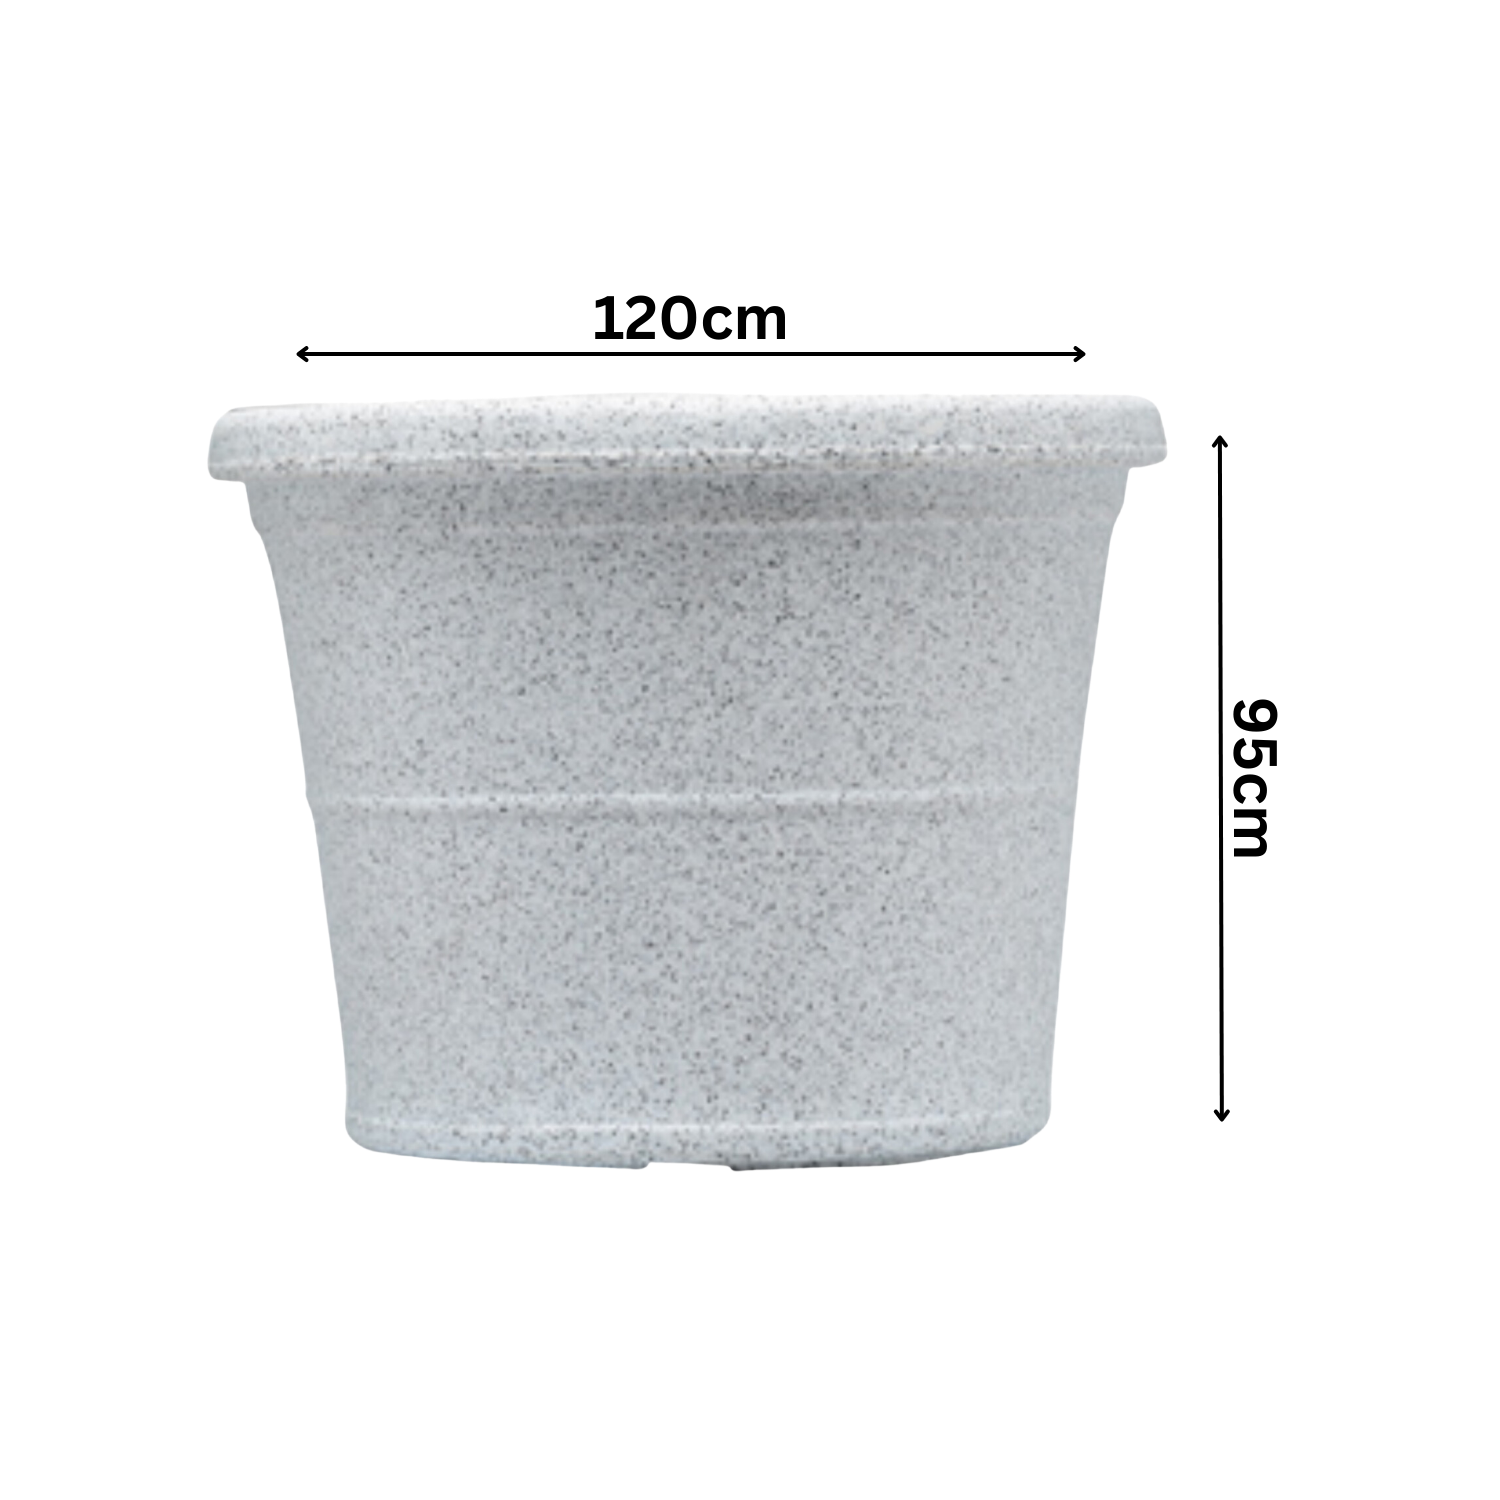 Duro Rotomolded Round Plastic Pot For Home & Garden (White Stone Finish, Pack Of 1)